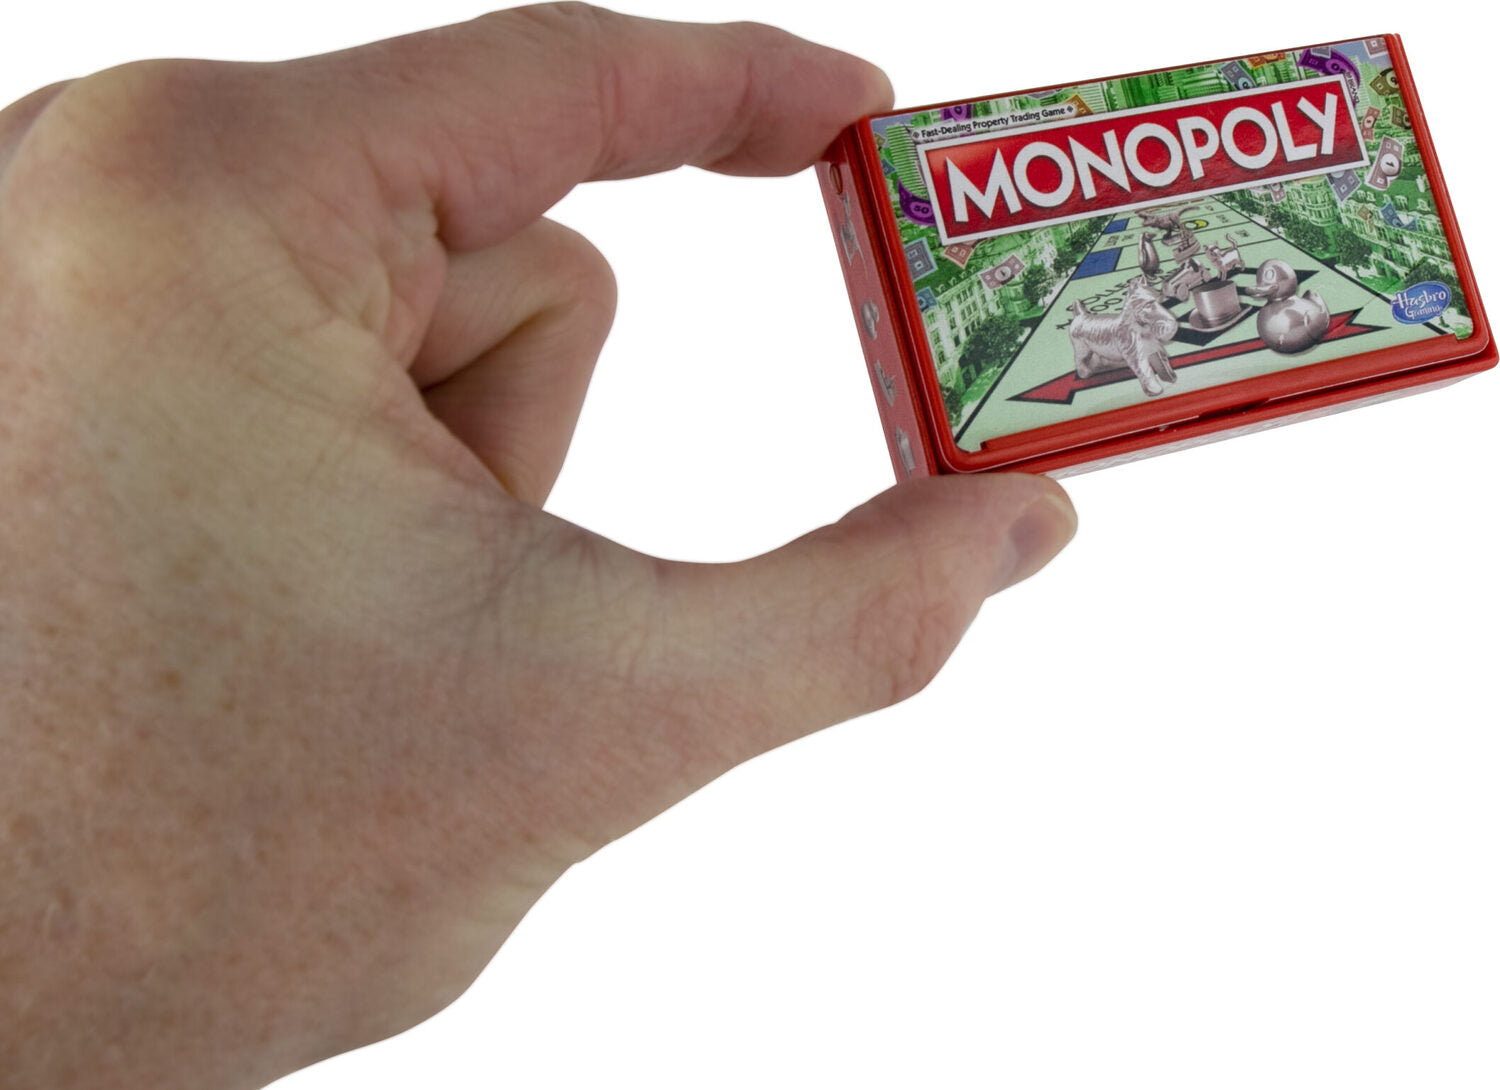 World's Smallest Monopoly